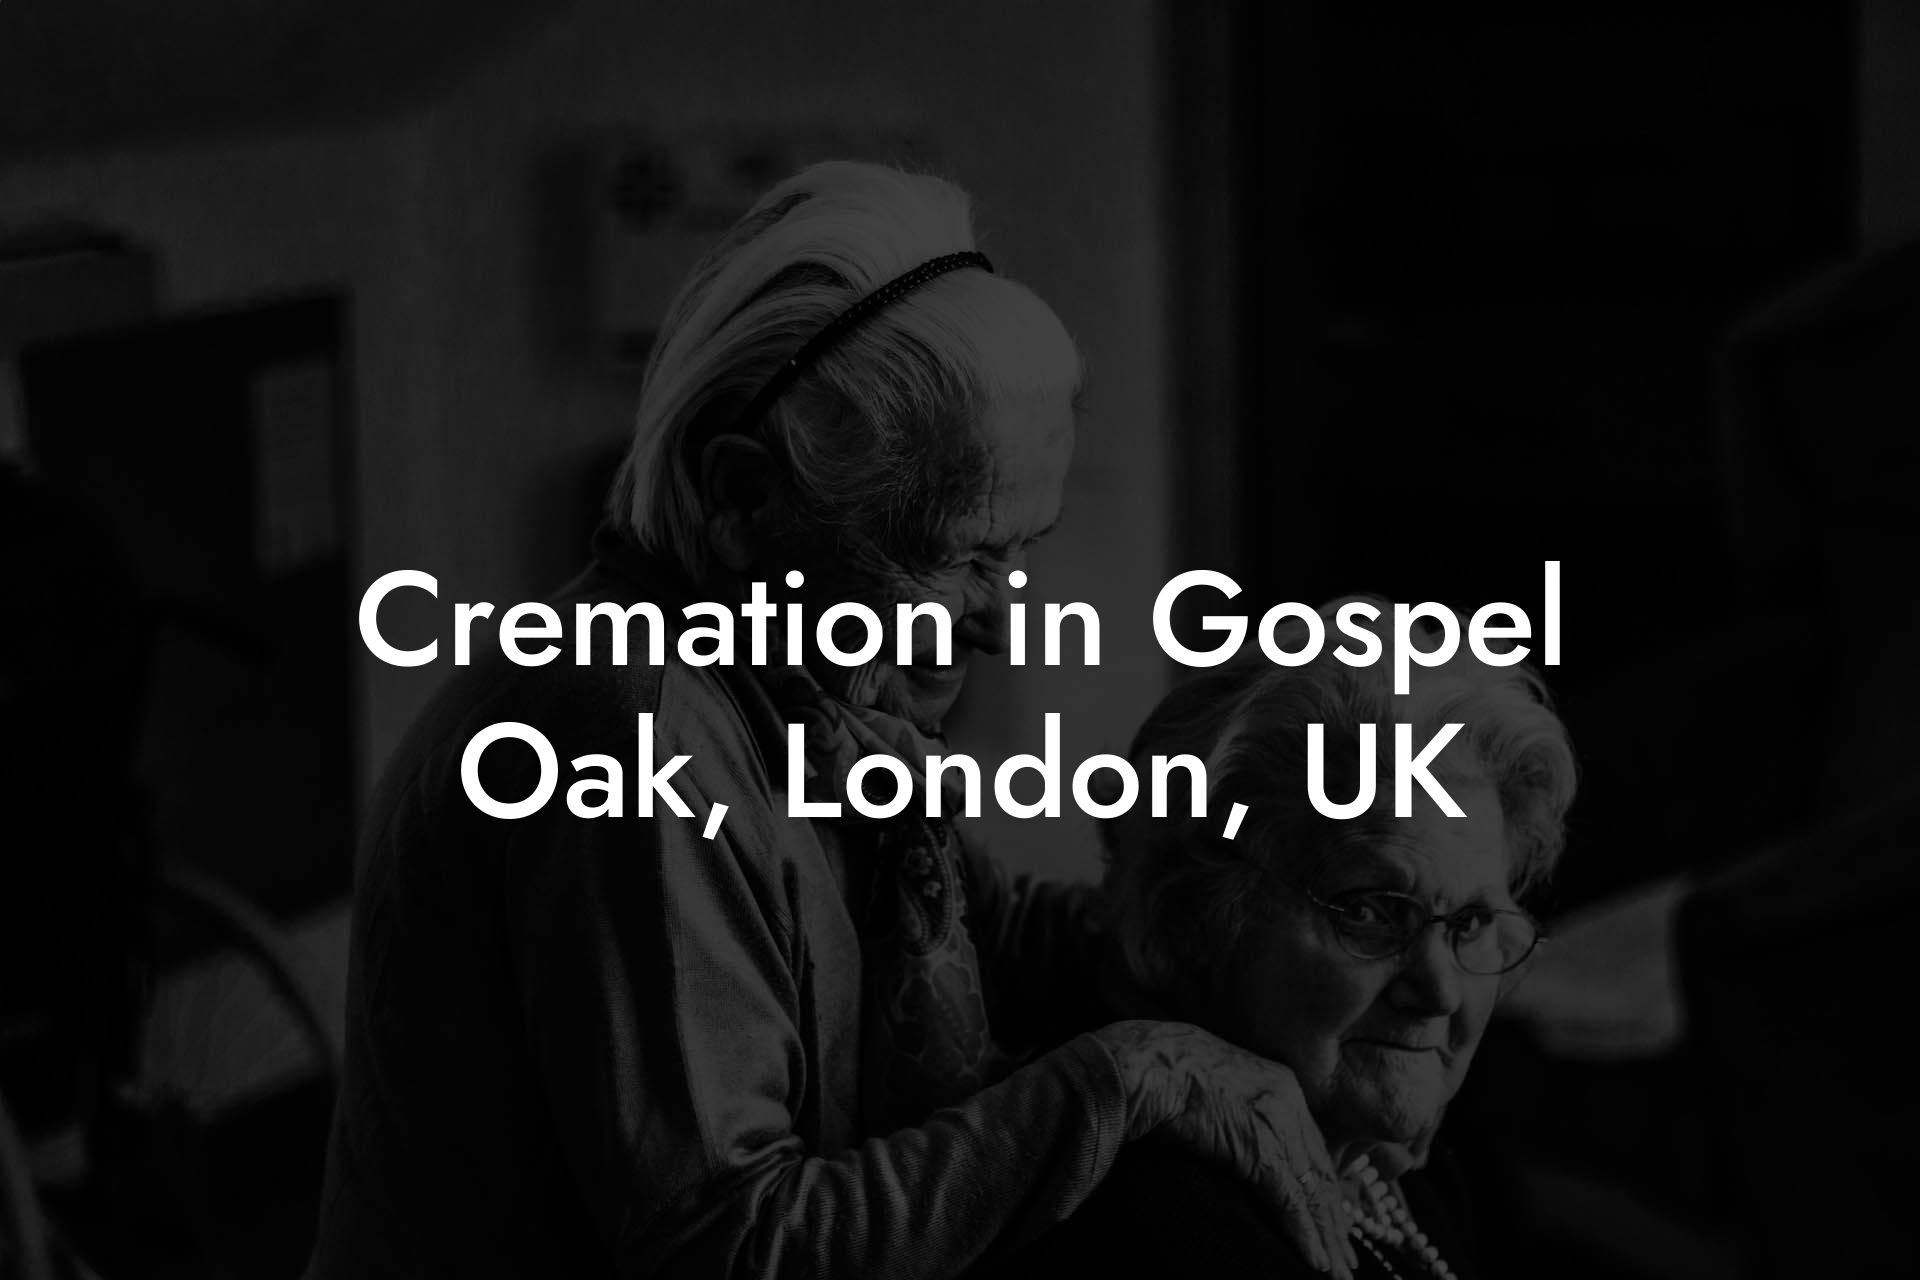 Cremation in Gospel Oak, London, UK